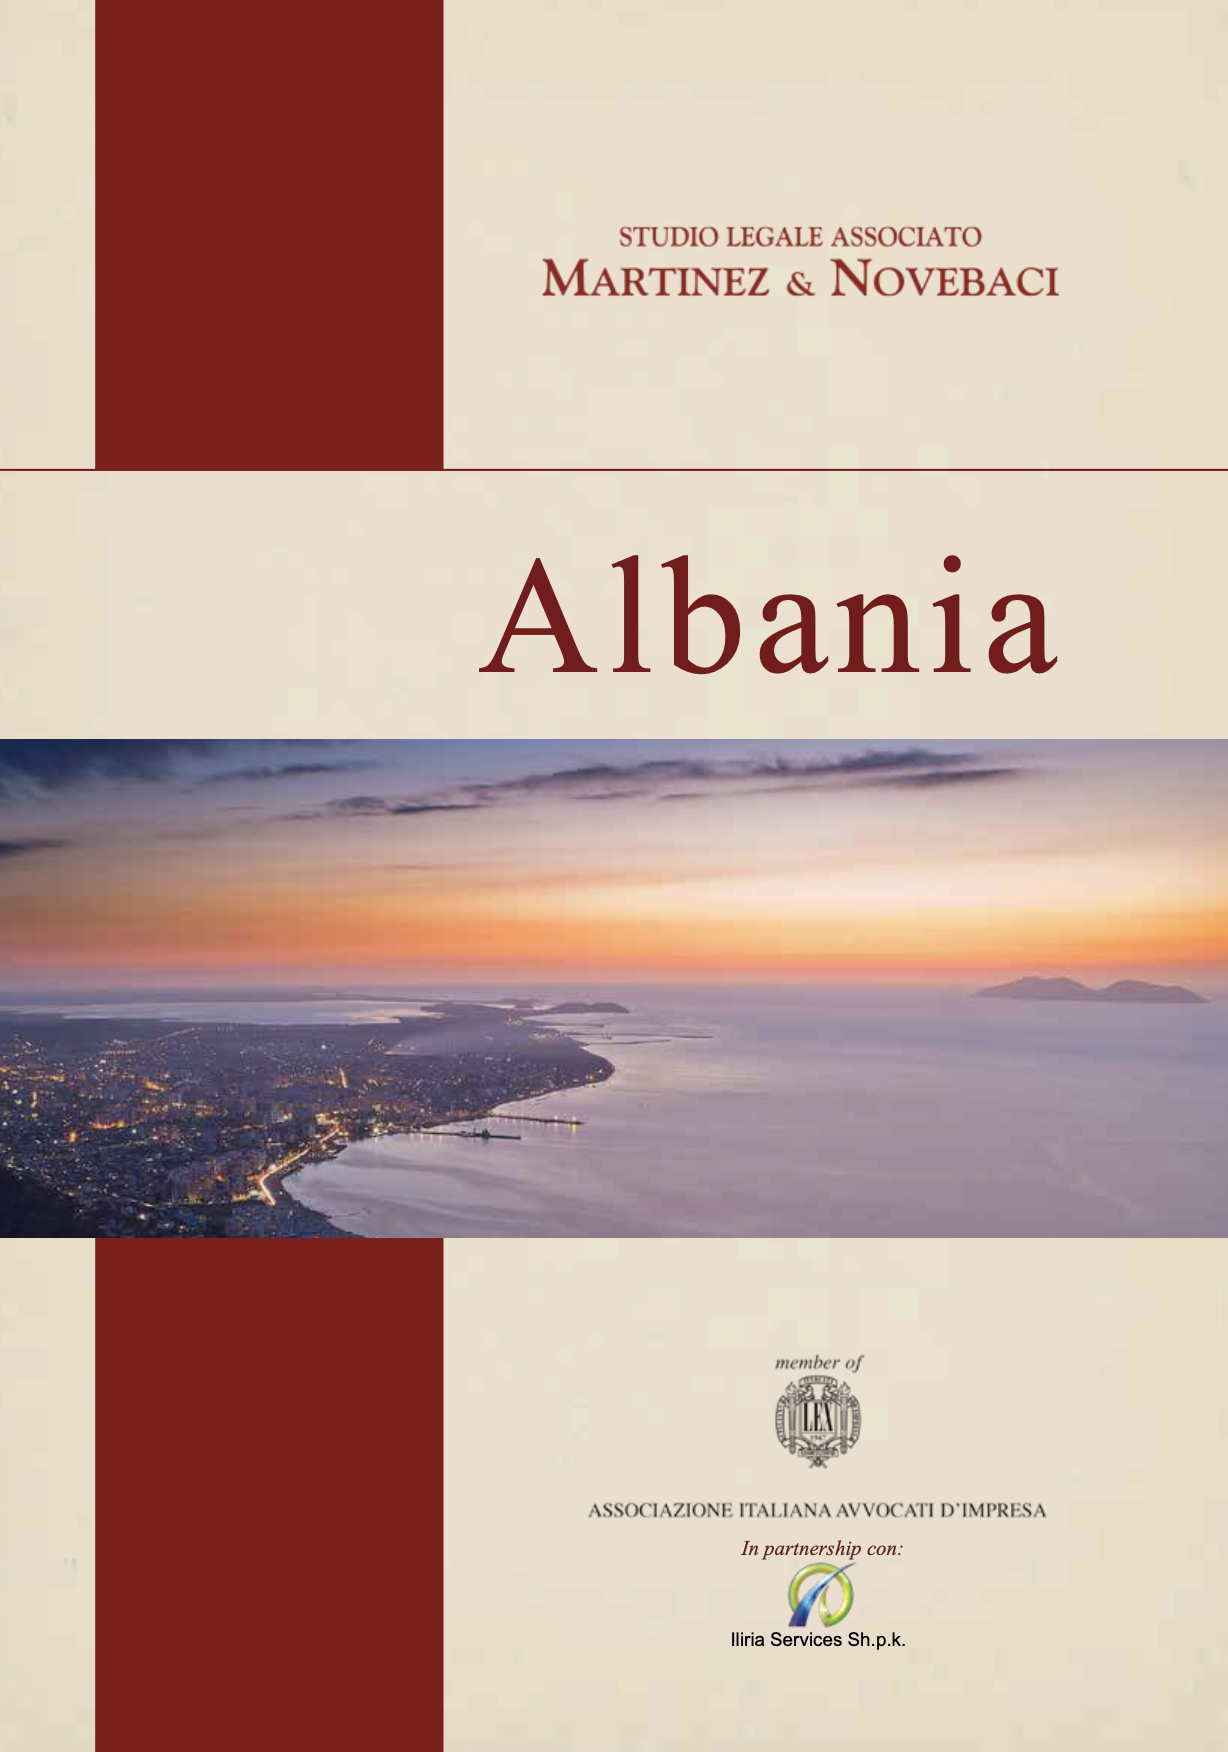 https://www.martinez-novebaci.it/wp-content/uploads/2021/07/albania.png